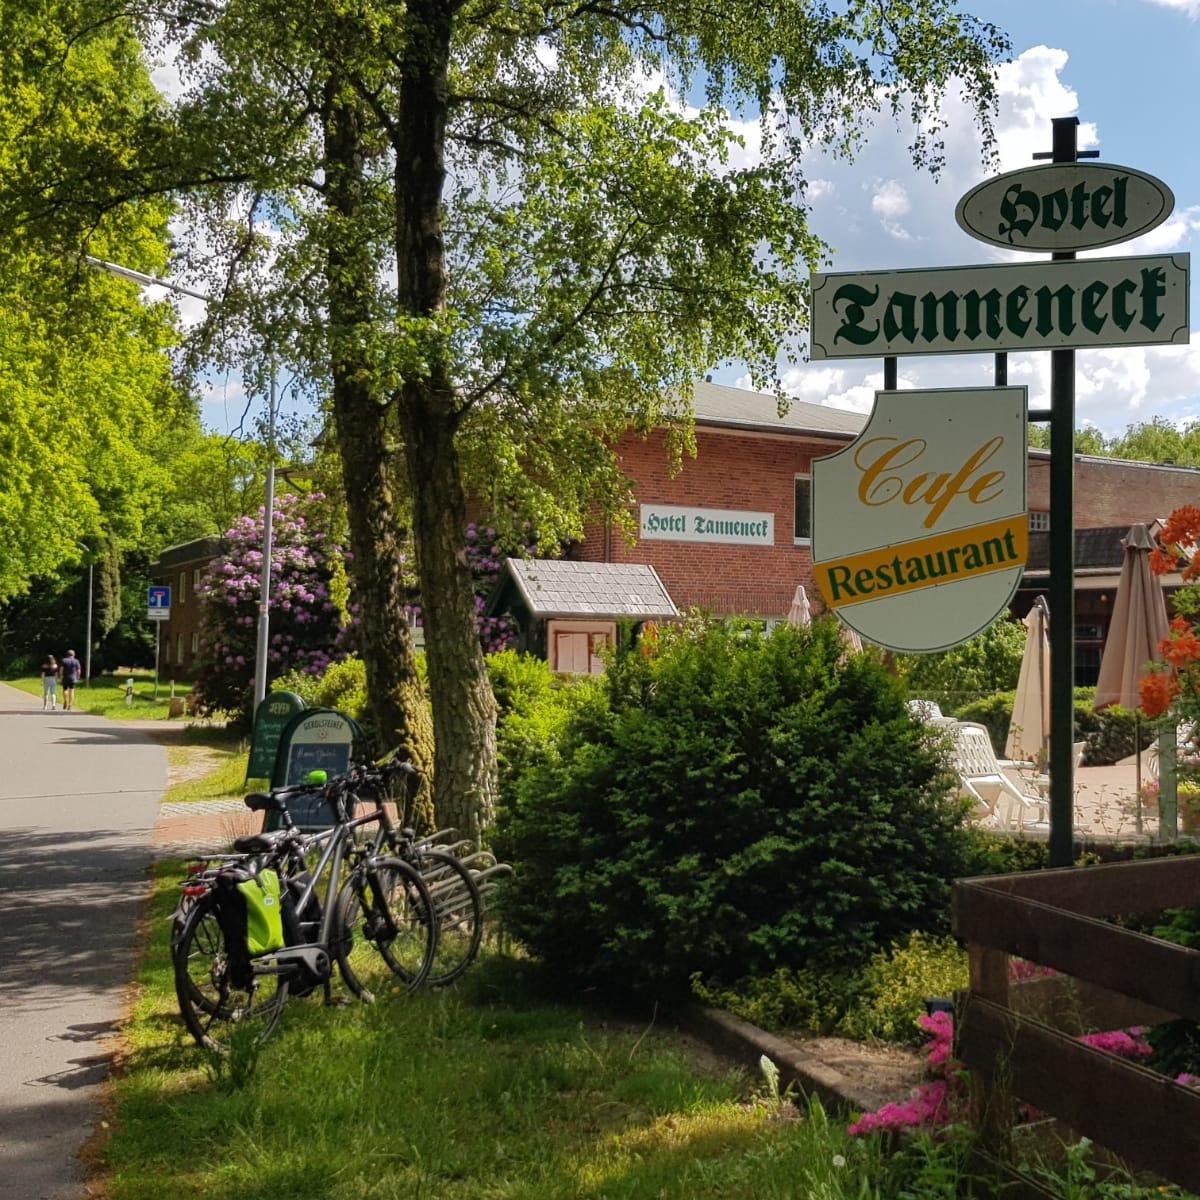 Restaurant "Hotel Tanneneck" in Bad Bramstedt